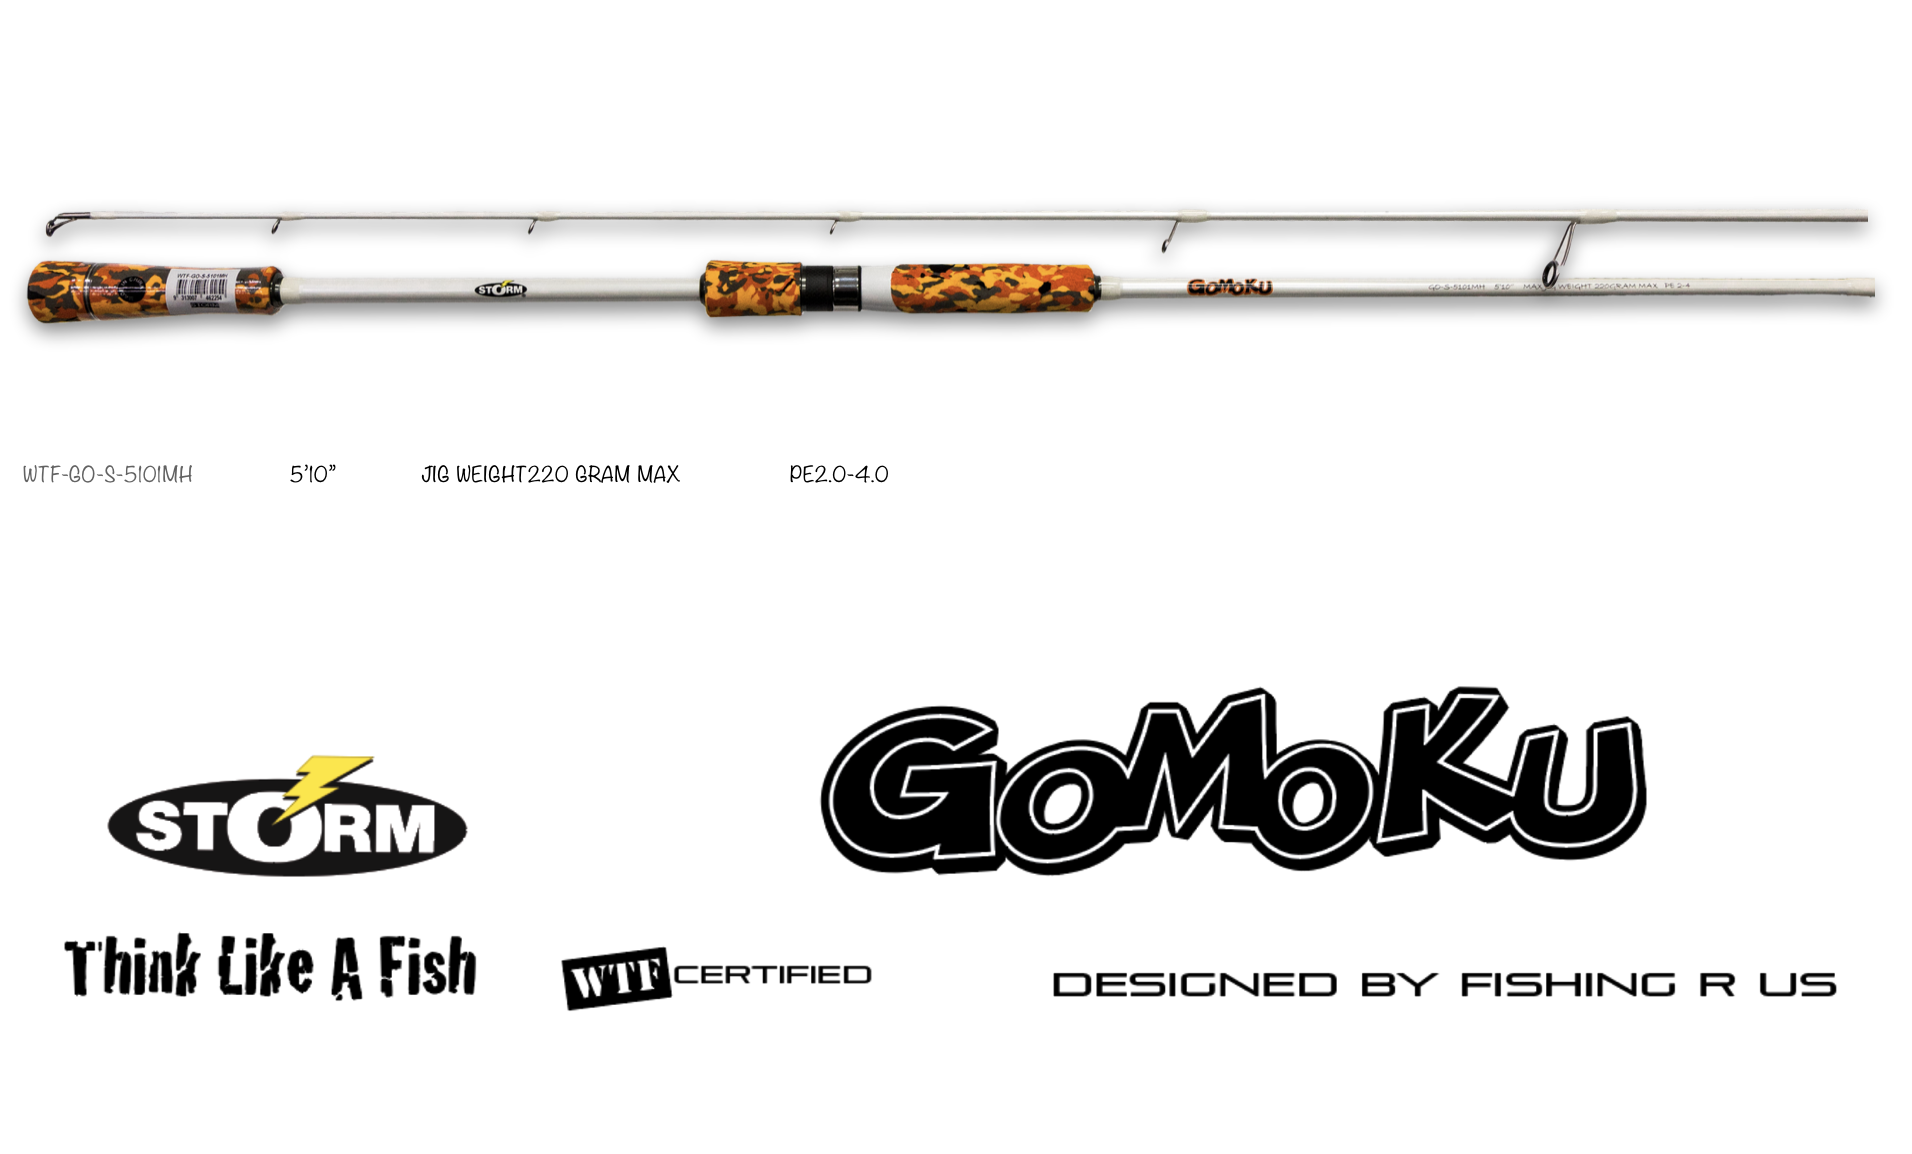 NEW STORM GOMOKU RODS DESIGNED BY FISHING R US – 4 SIZES – Fishing